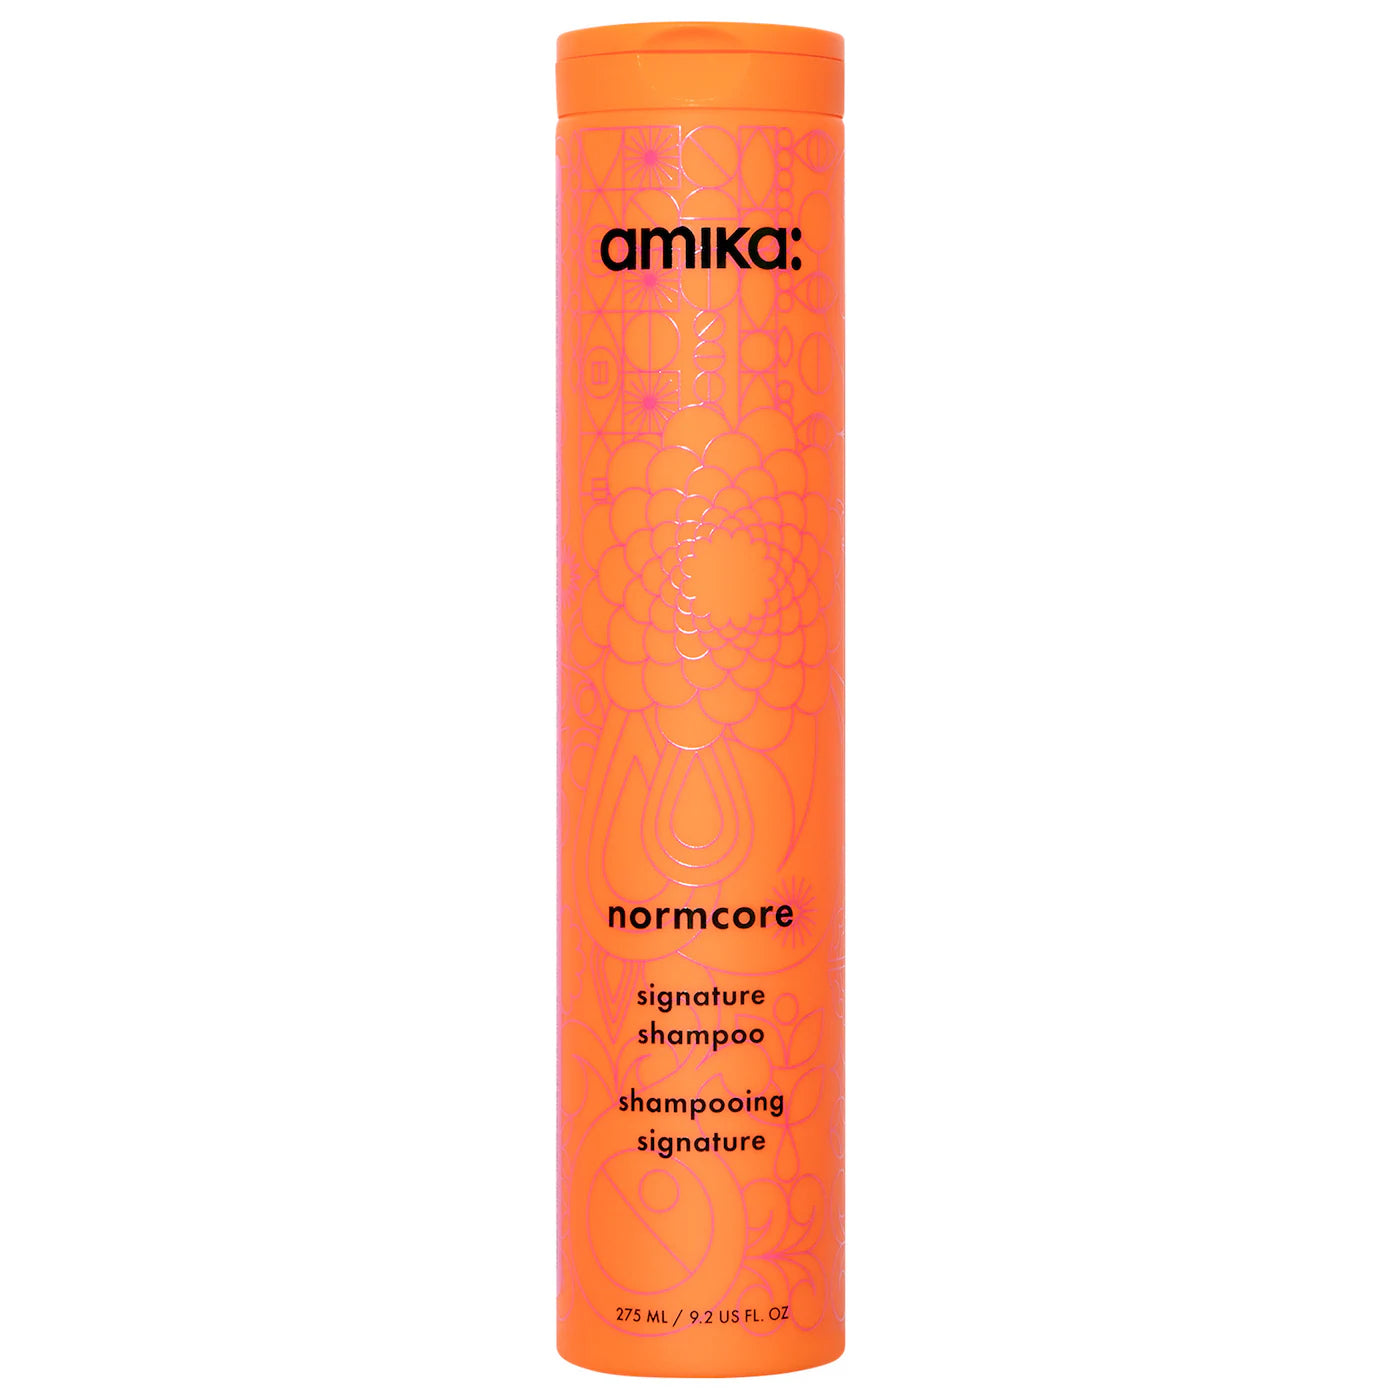 amika - Normcore Sulfate Free Shampoo | 275 mL